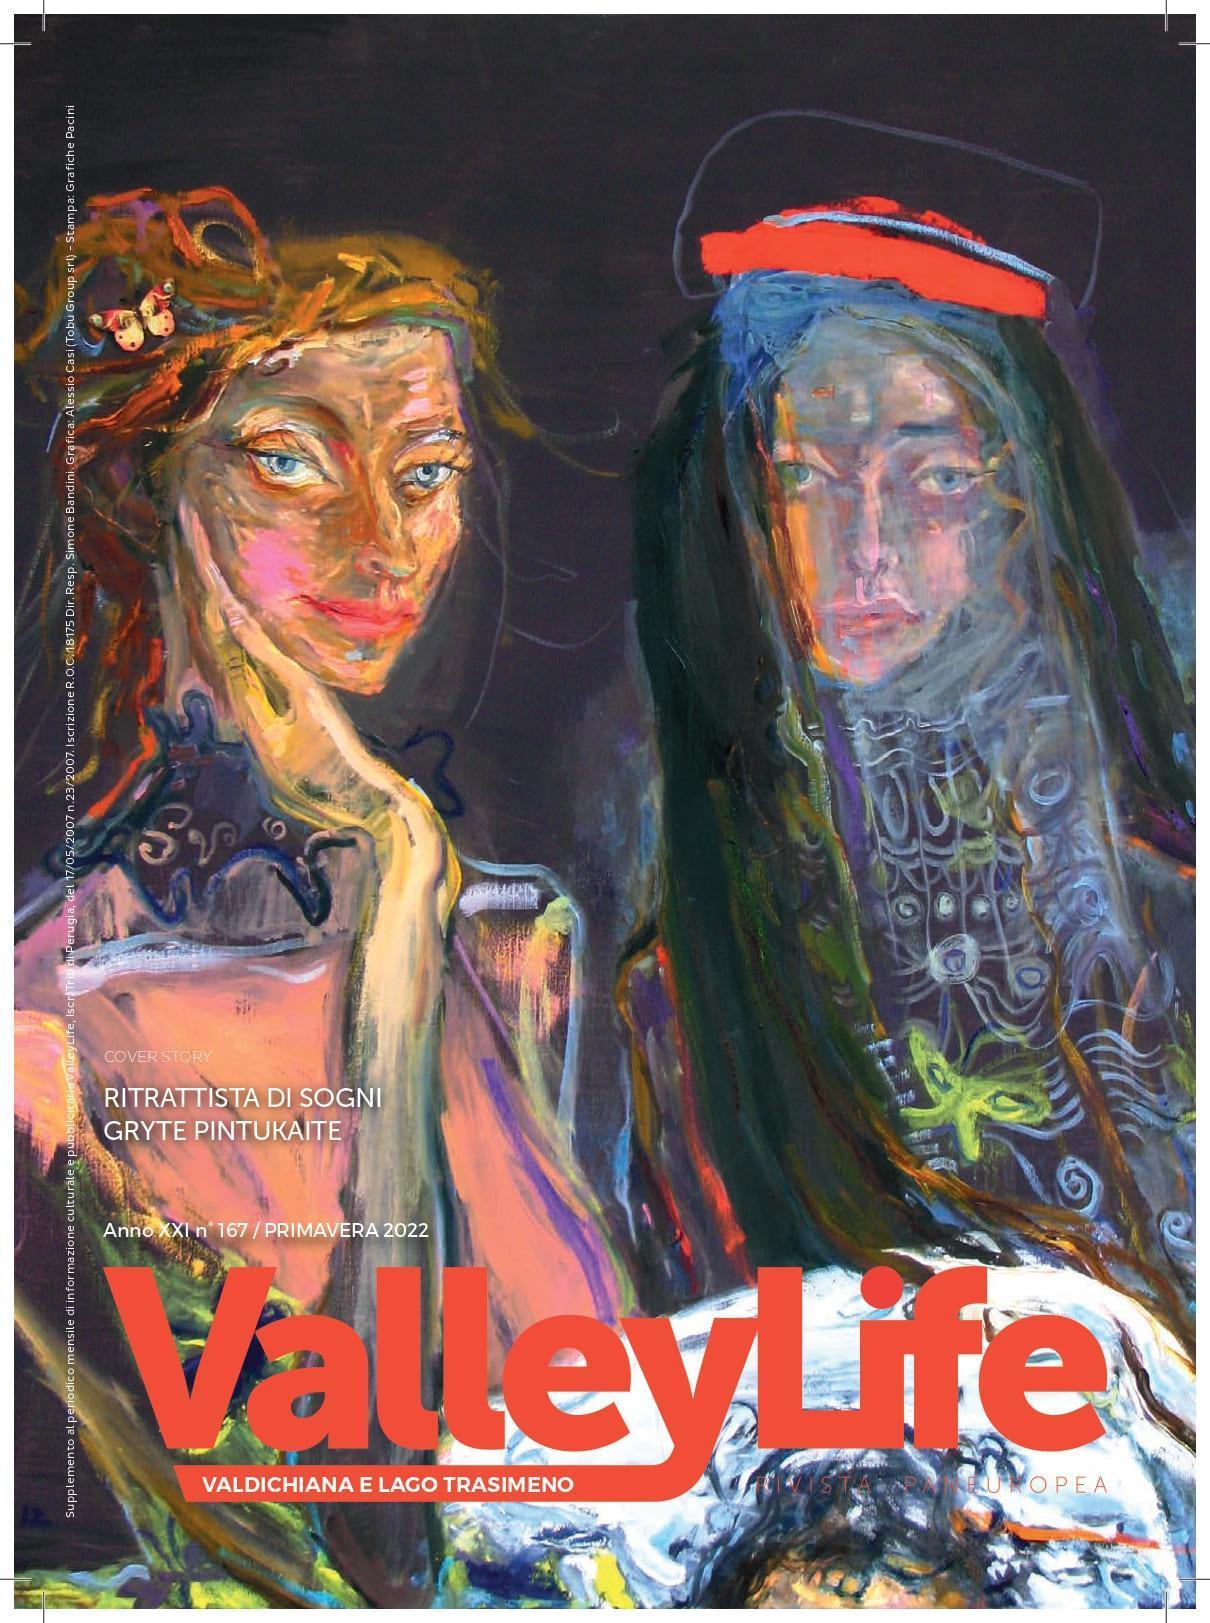 Valley Life “Valdichiana e Lago Trasimeno” Spring 2022